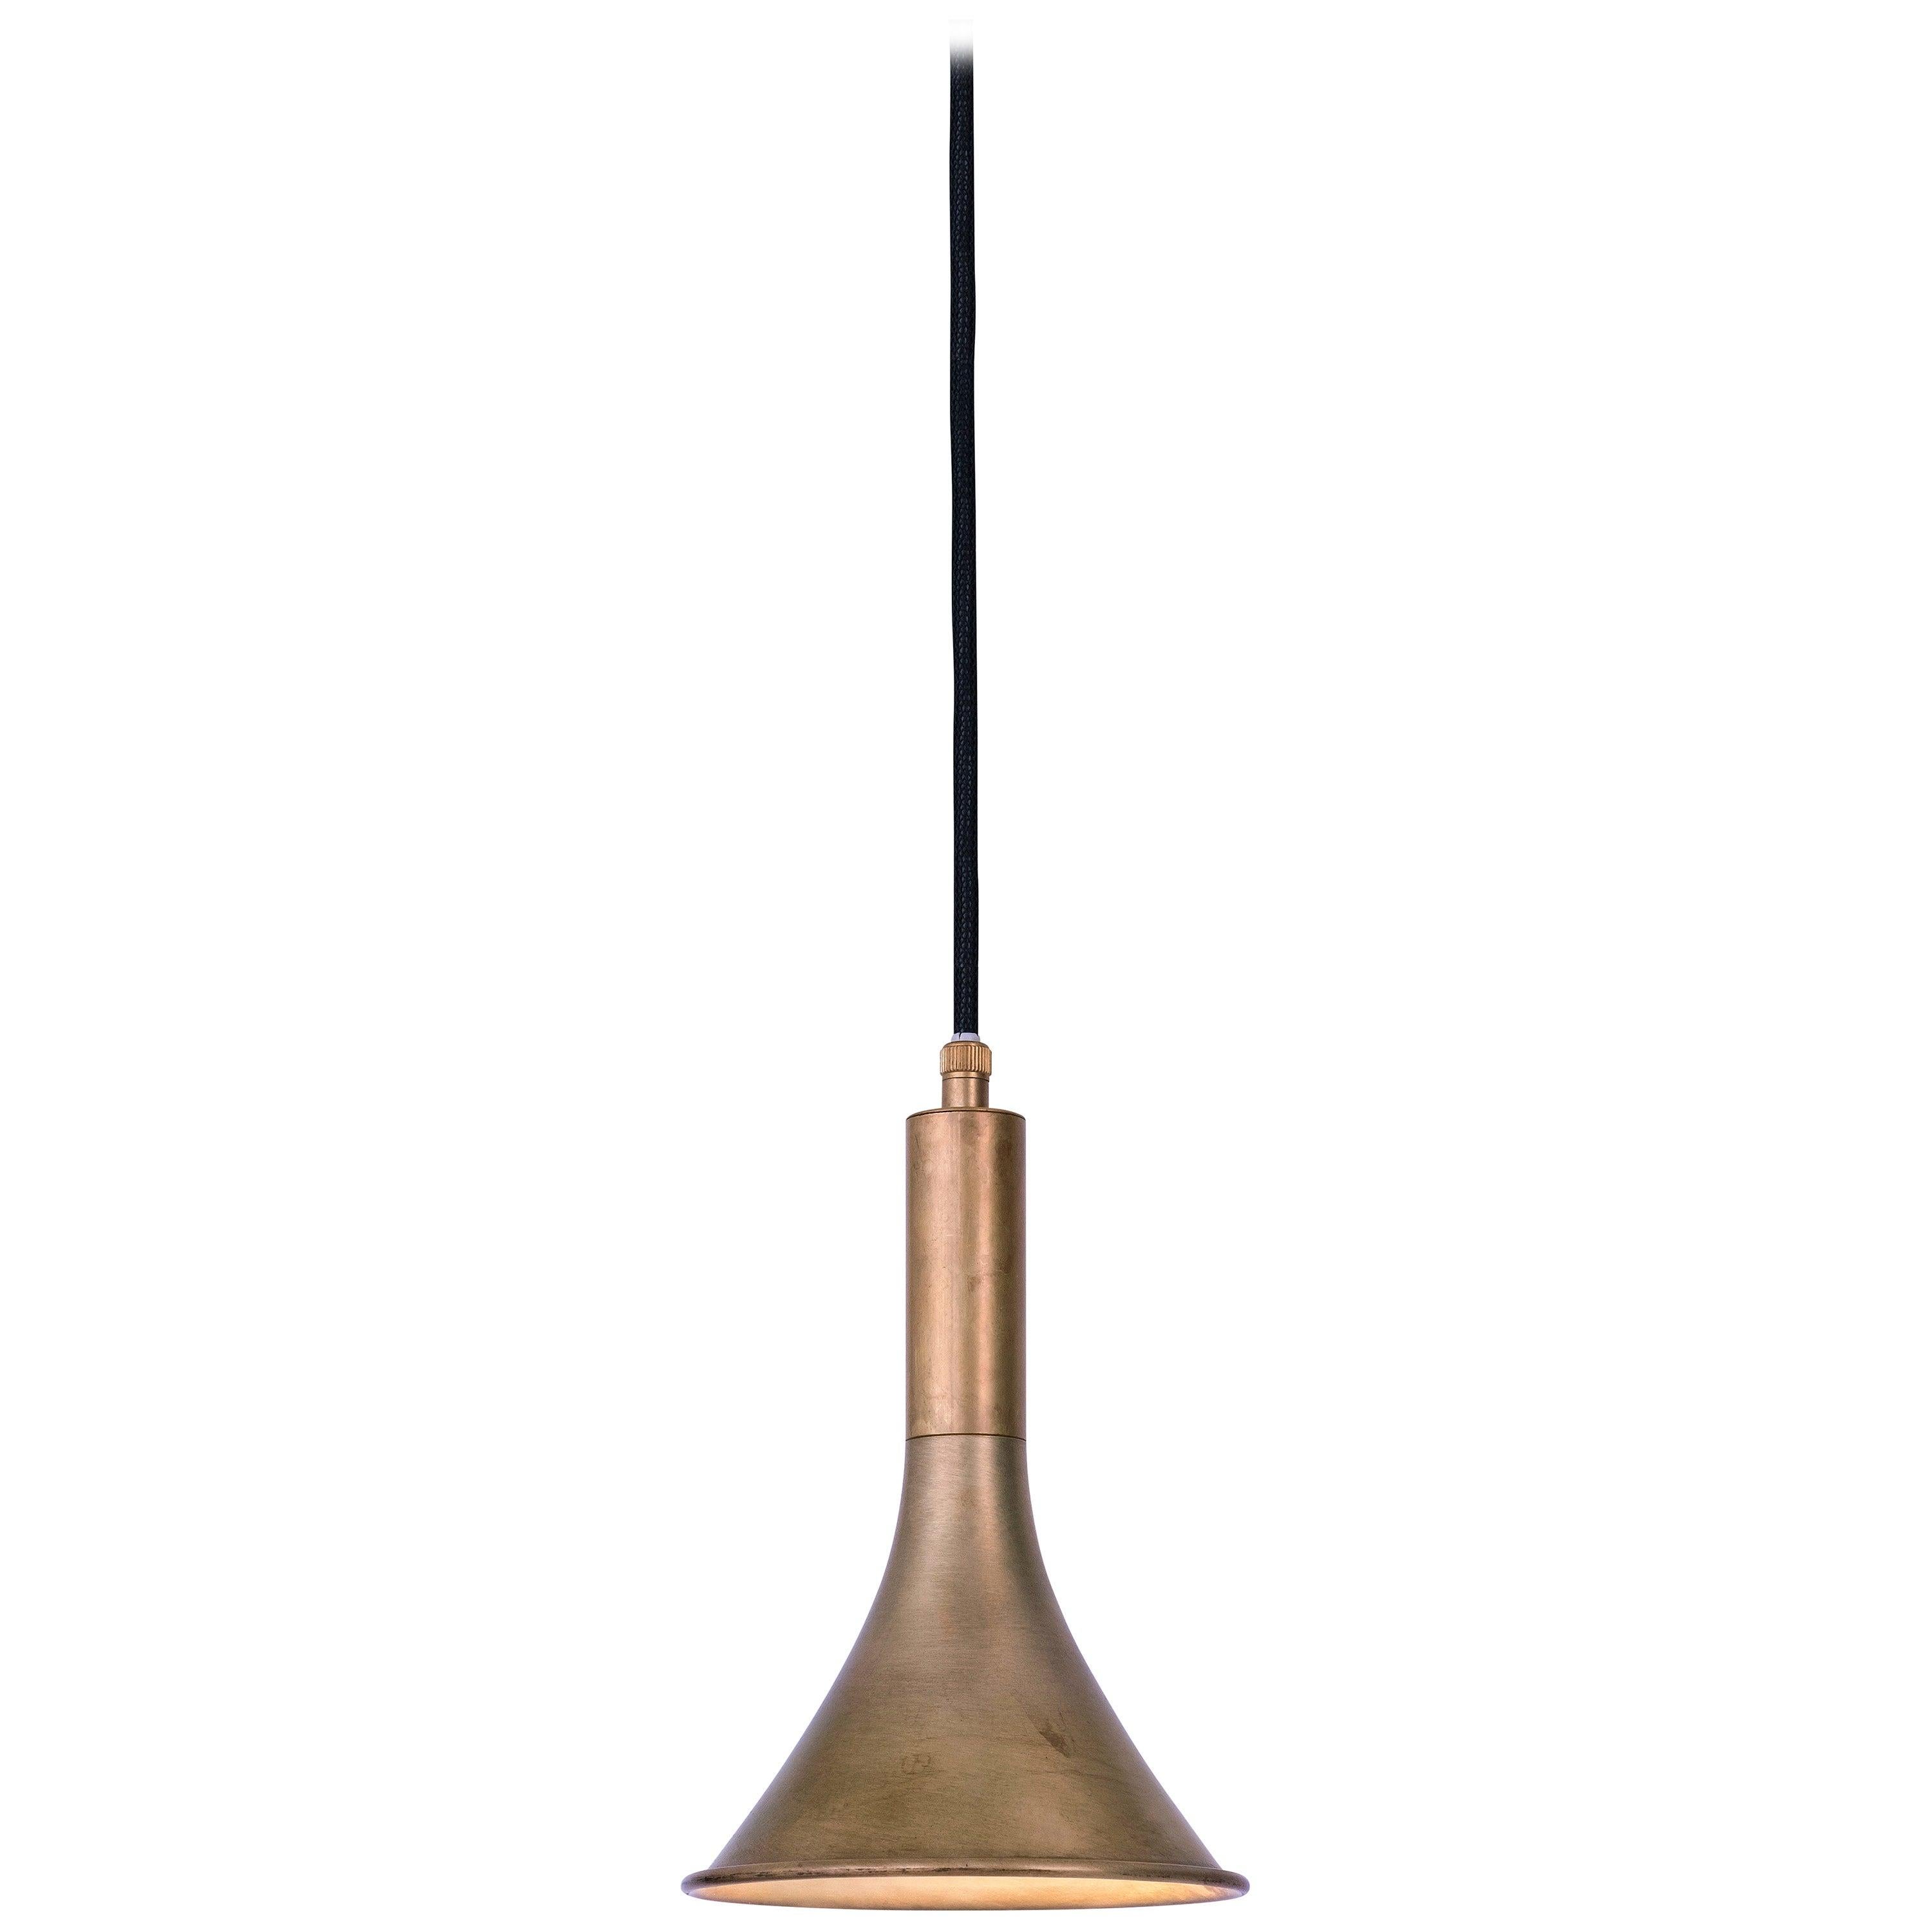 Jesper Ståhl Megafon Raw Brass Ceiling Lamp by Konsthantverk In New Condition For Sale In Barcelona, Barcelona